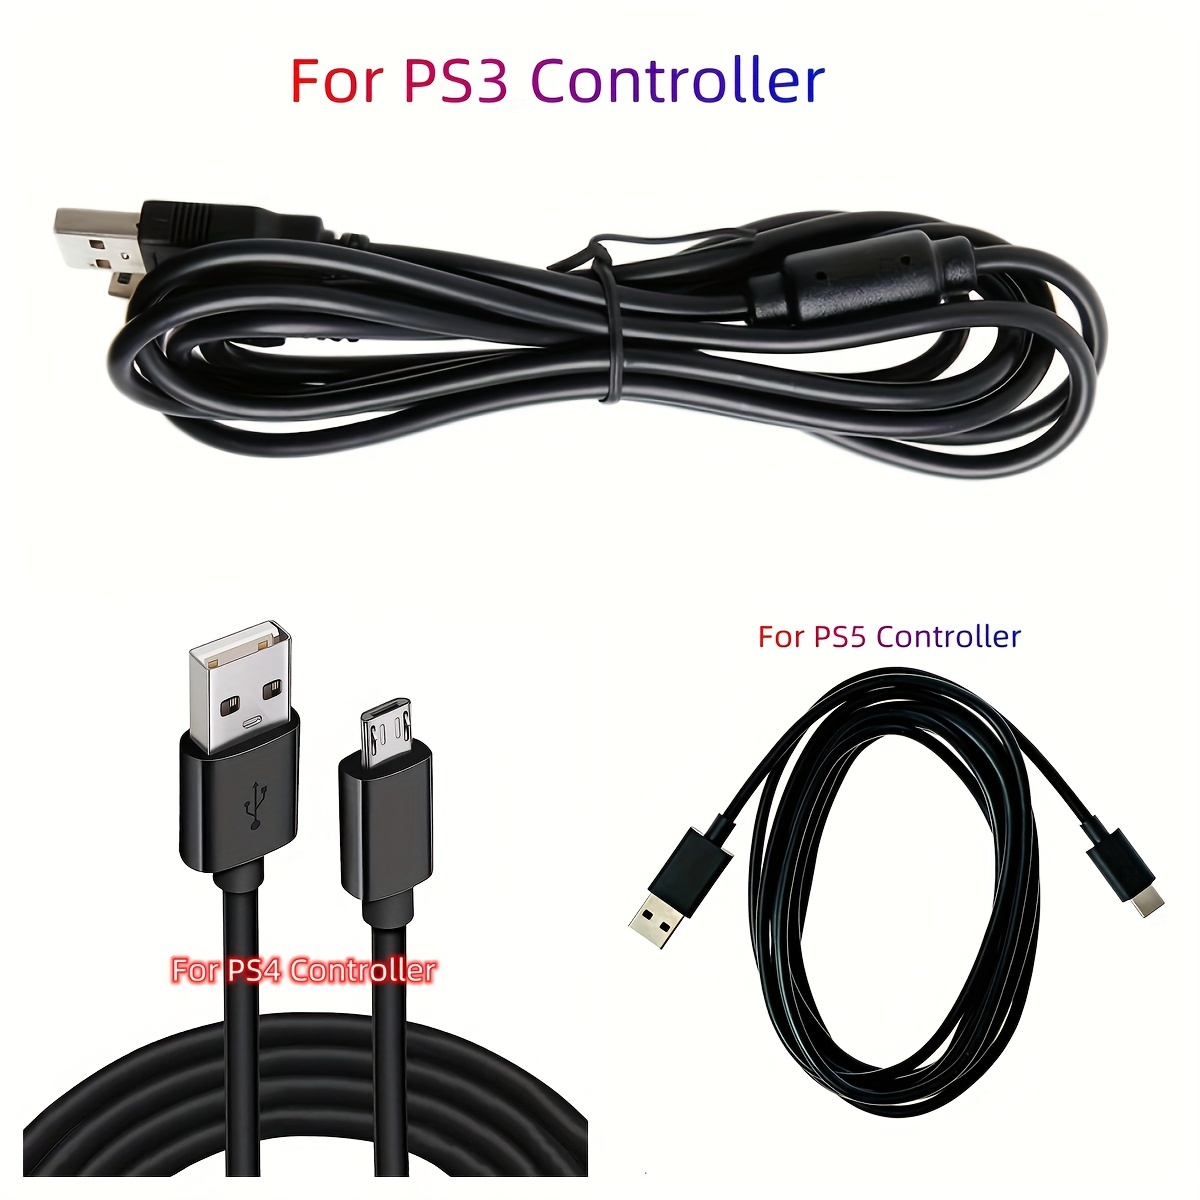 CABLE DE PODER A/C COMPATIBLE CON PS4 PS3 – ISI-TECH